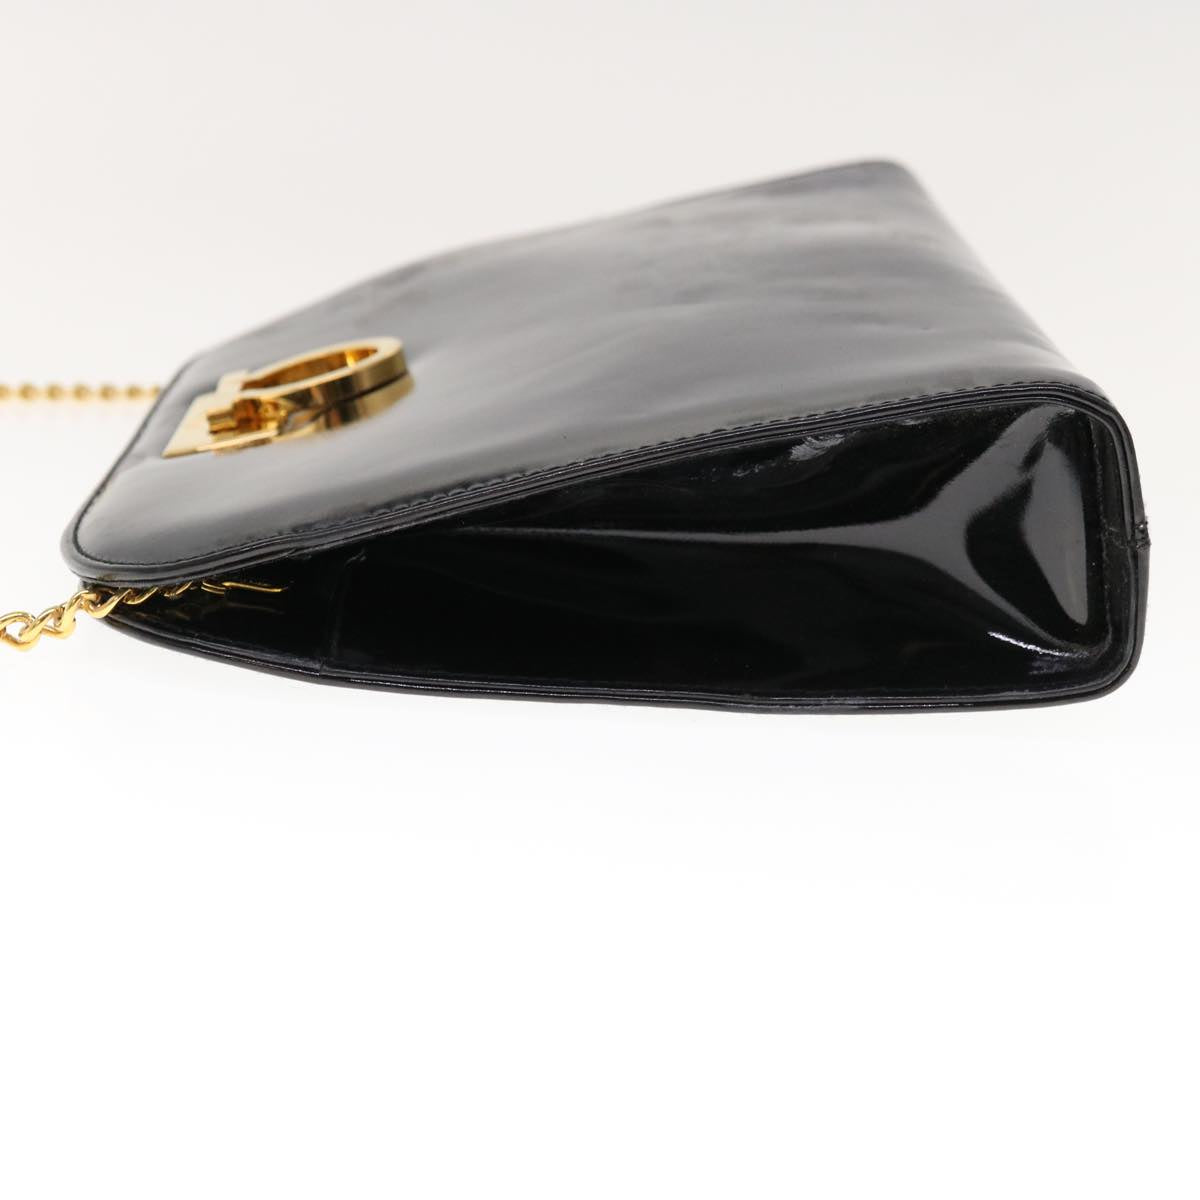 Salvatore Ferragamo Gancini Chain Shoulder Bag patent Black Auth 66129